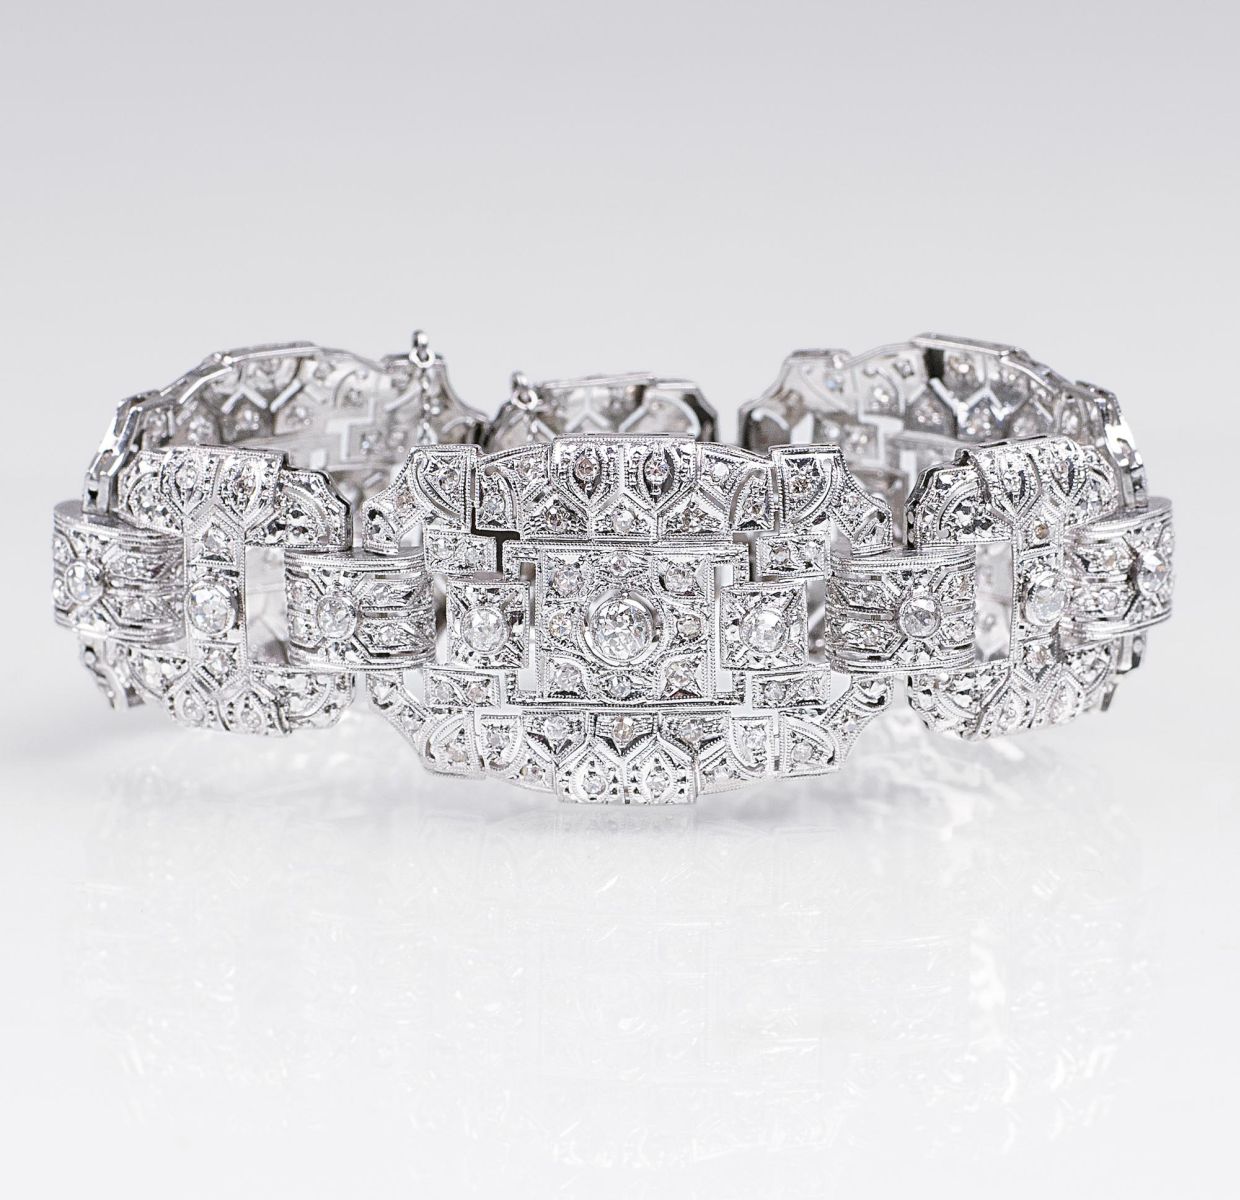 An opulent Diamond Bracelet in the style of Art-déco - image 2